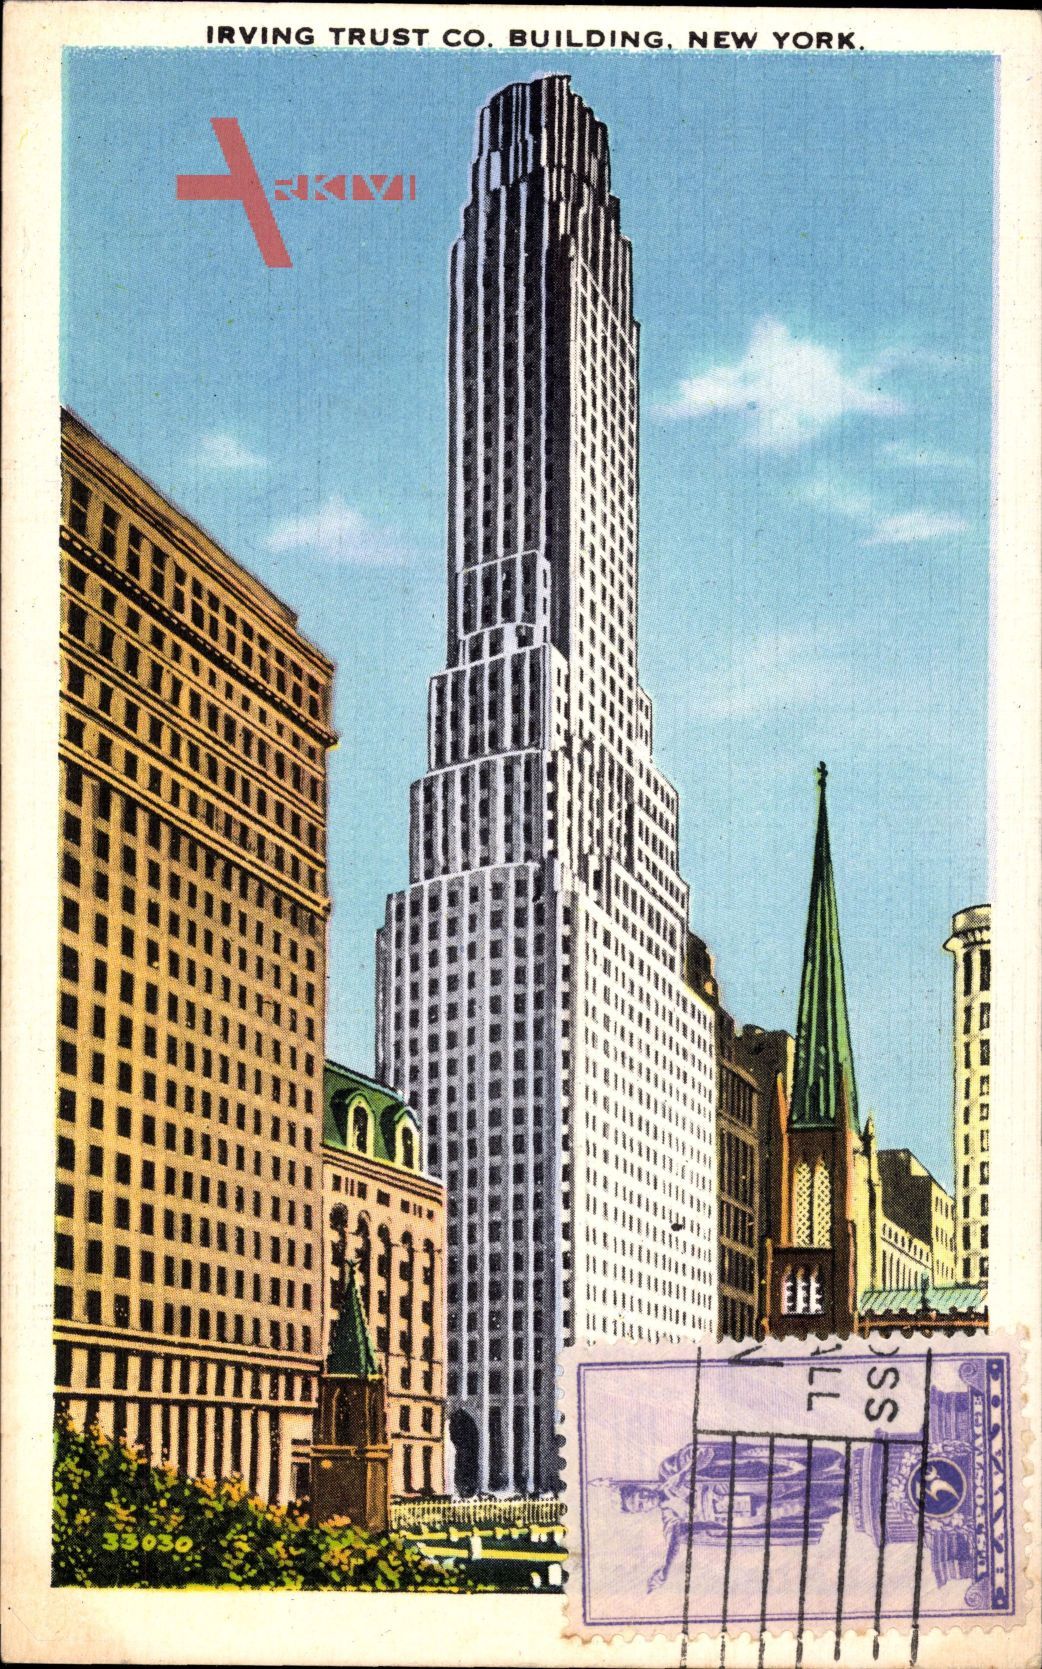 New York City USA, Irving Trust Co. Building, skyscraper, Broadway, church